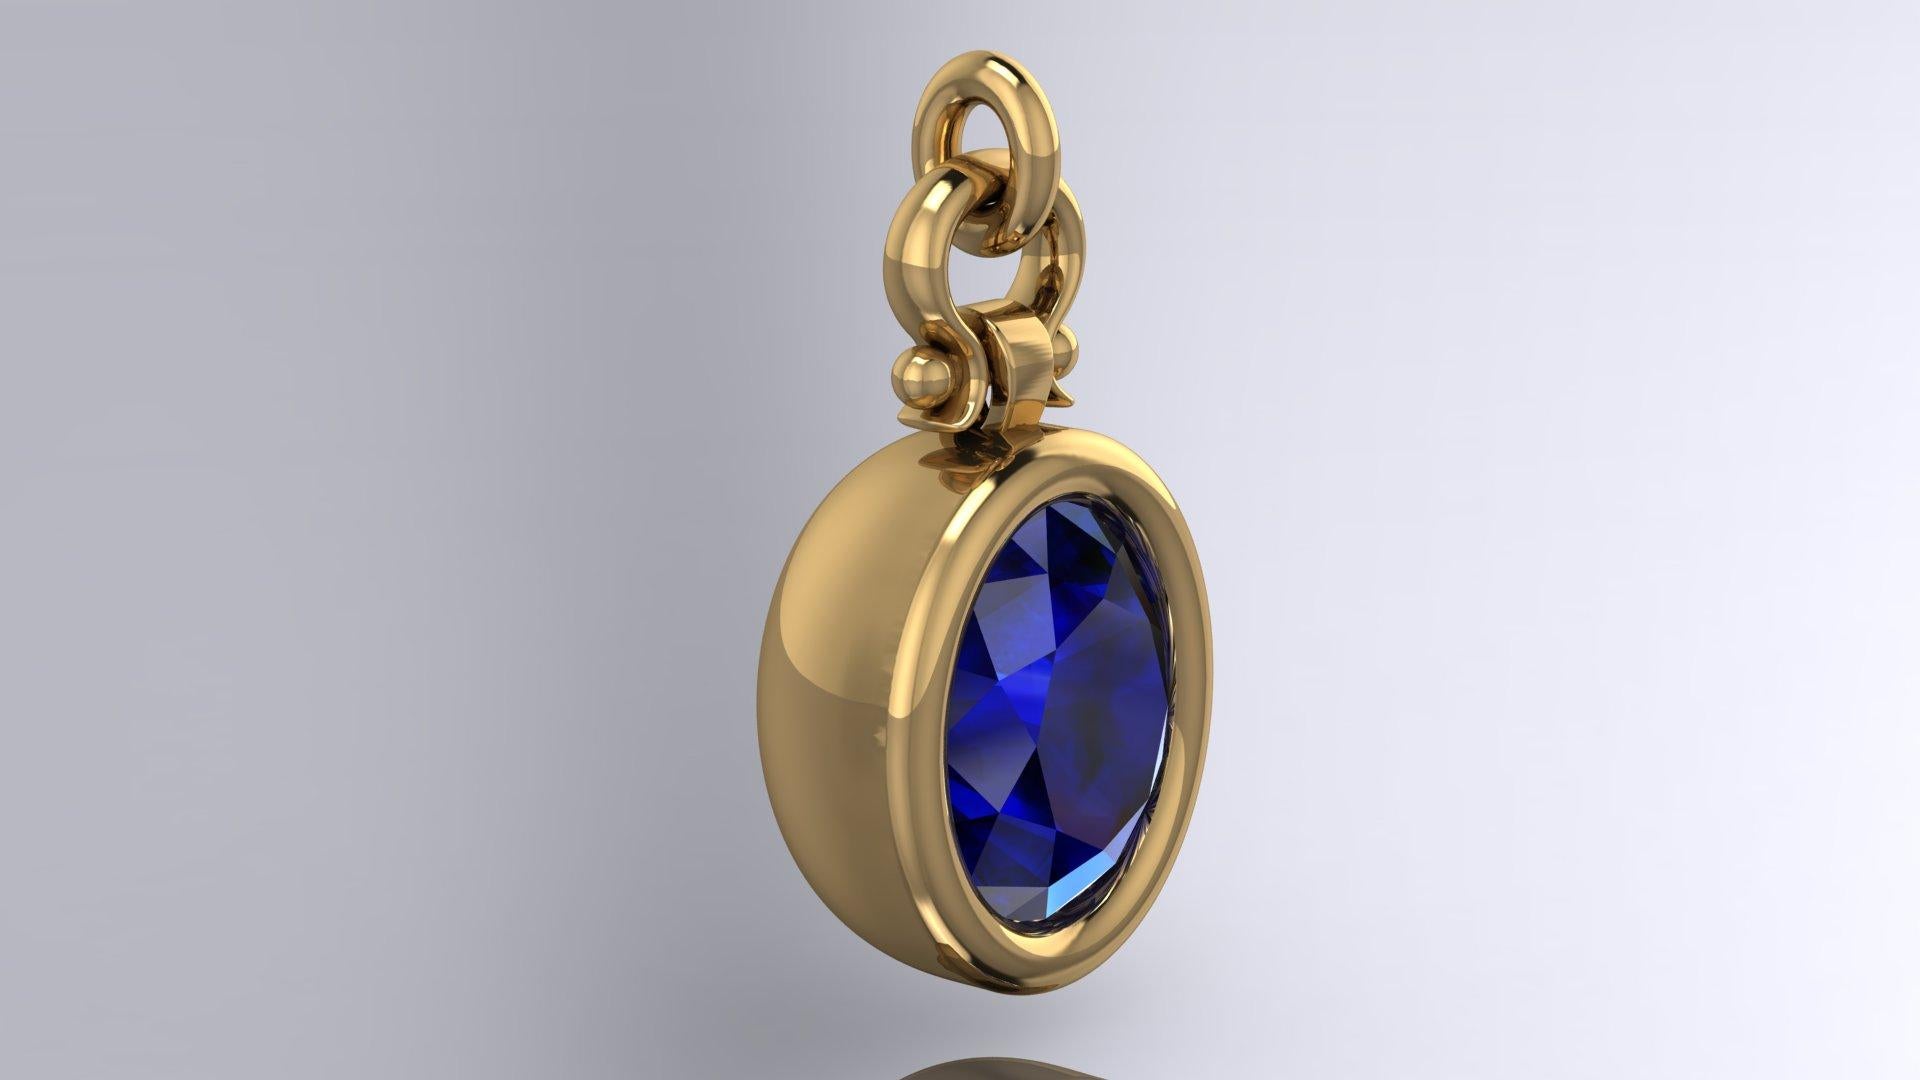 Contemporary Berberyn Certified 3.04 Carat Oval Blue Sapphire Custom Pendant Necklace in 18k For Sale